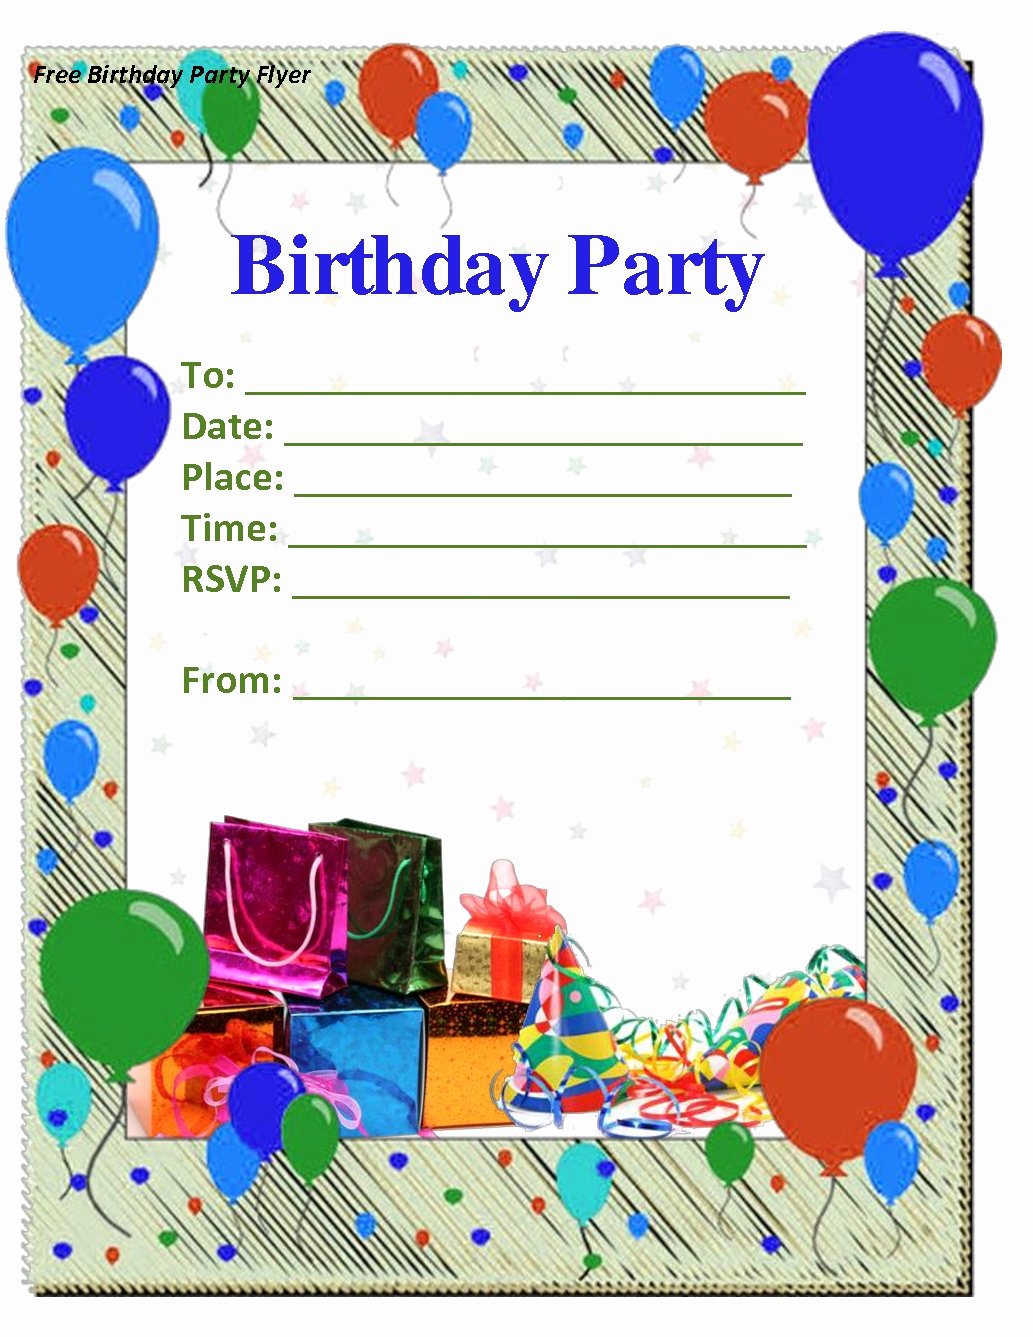 50 Free Birthday Invitation Templates – You Will Love